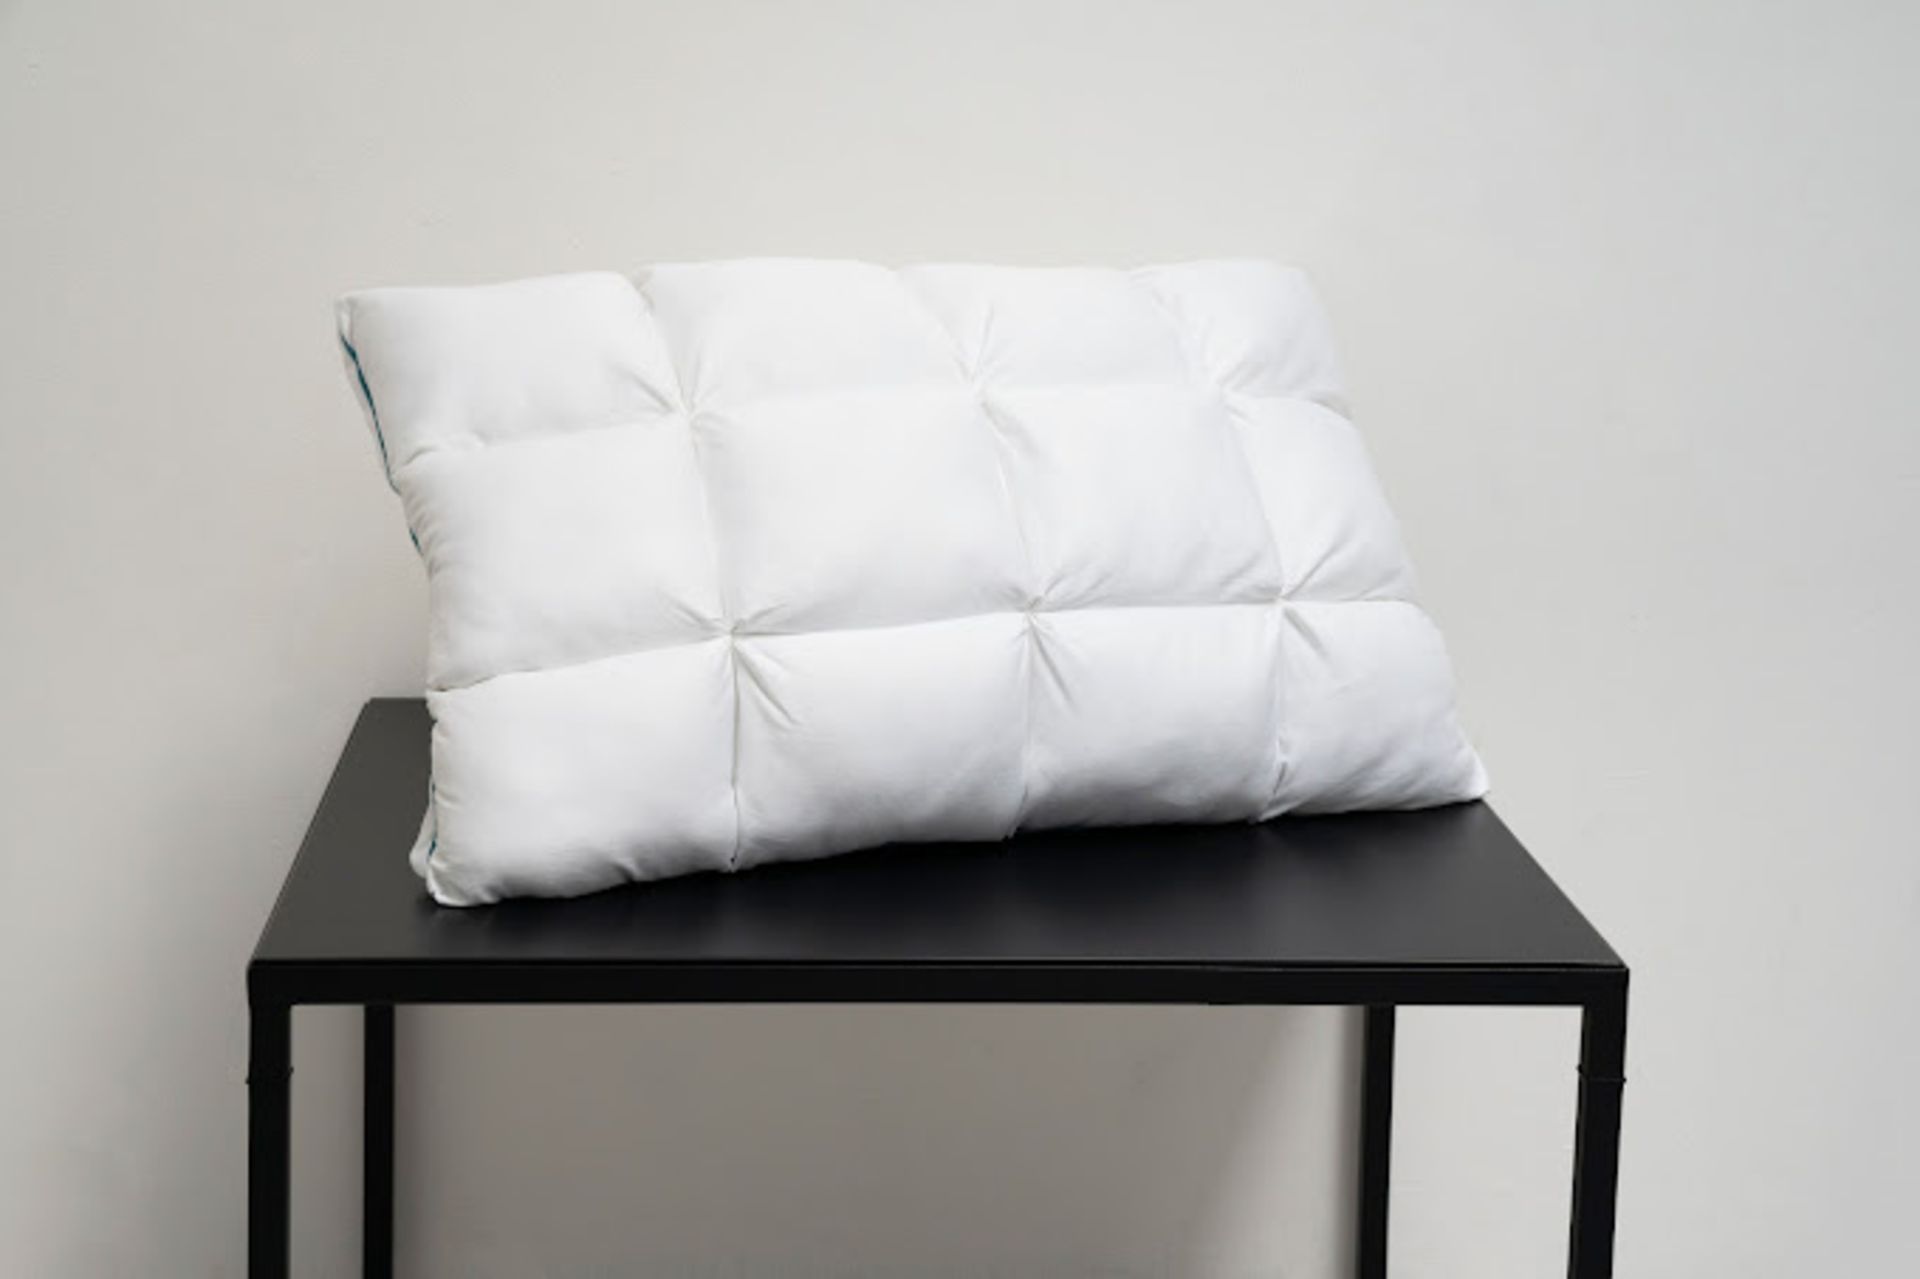 2 x ComfaSleep PL0001 Pillows - Image 3 of 9